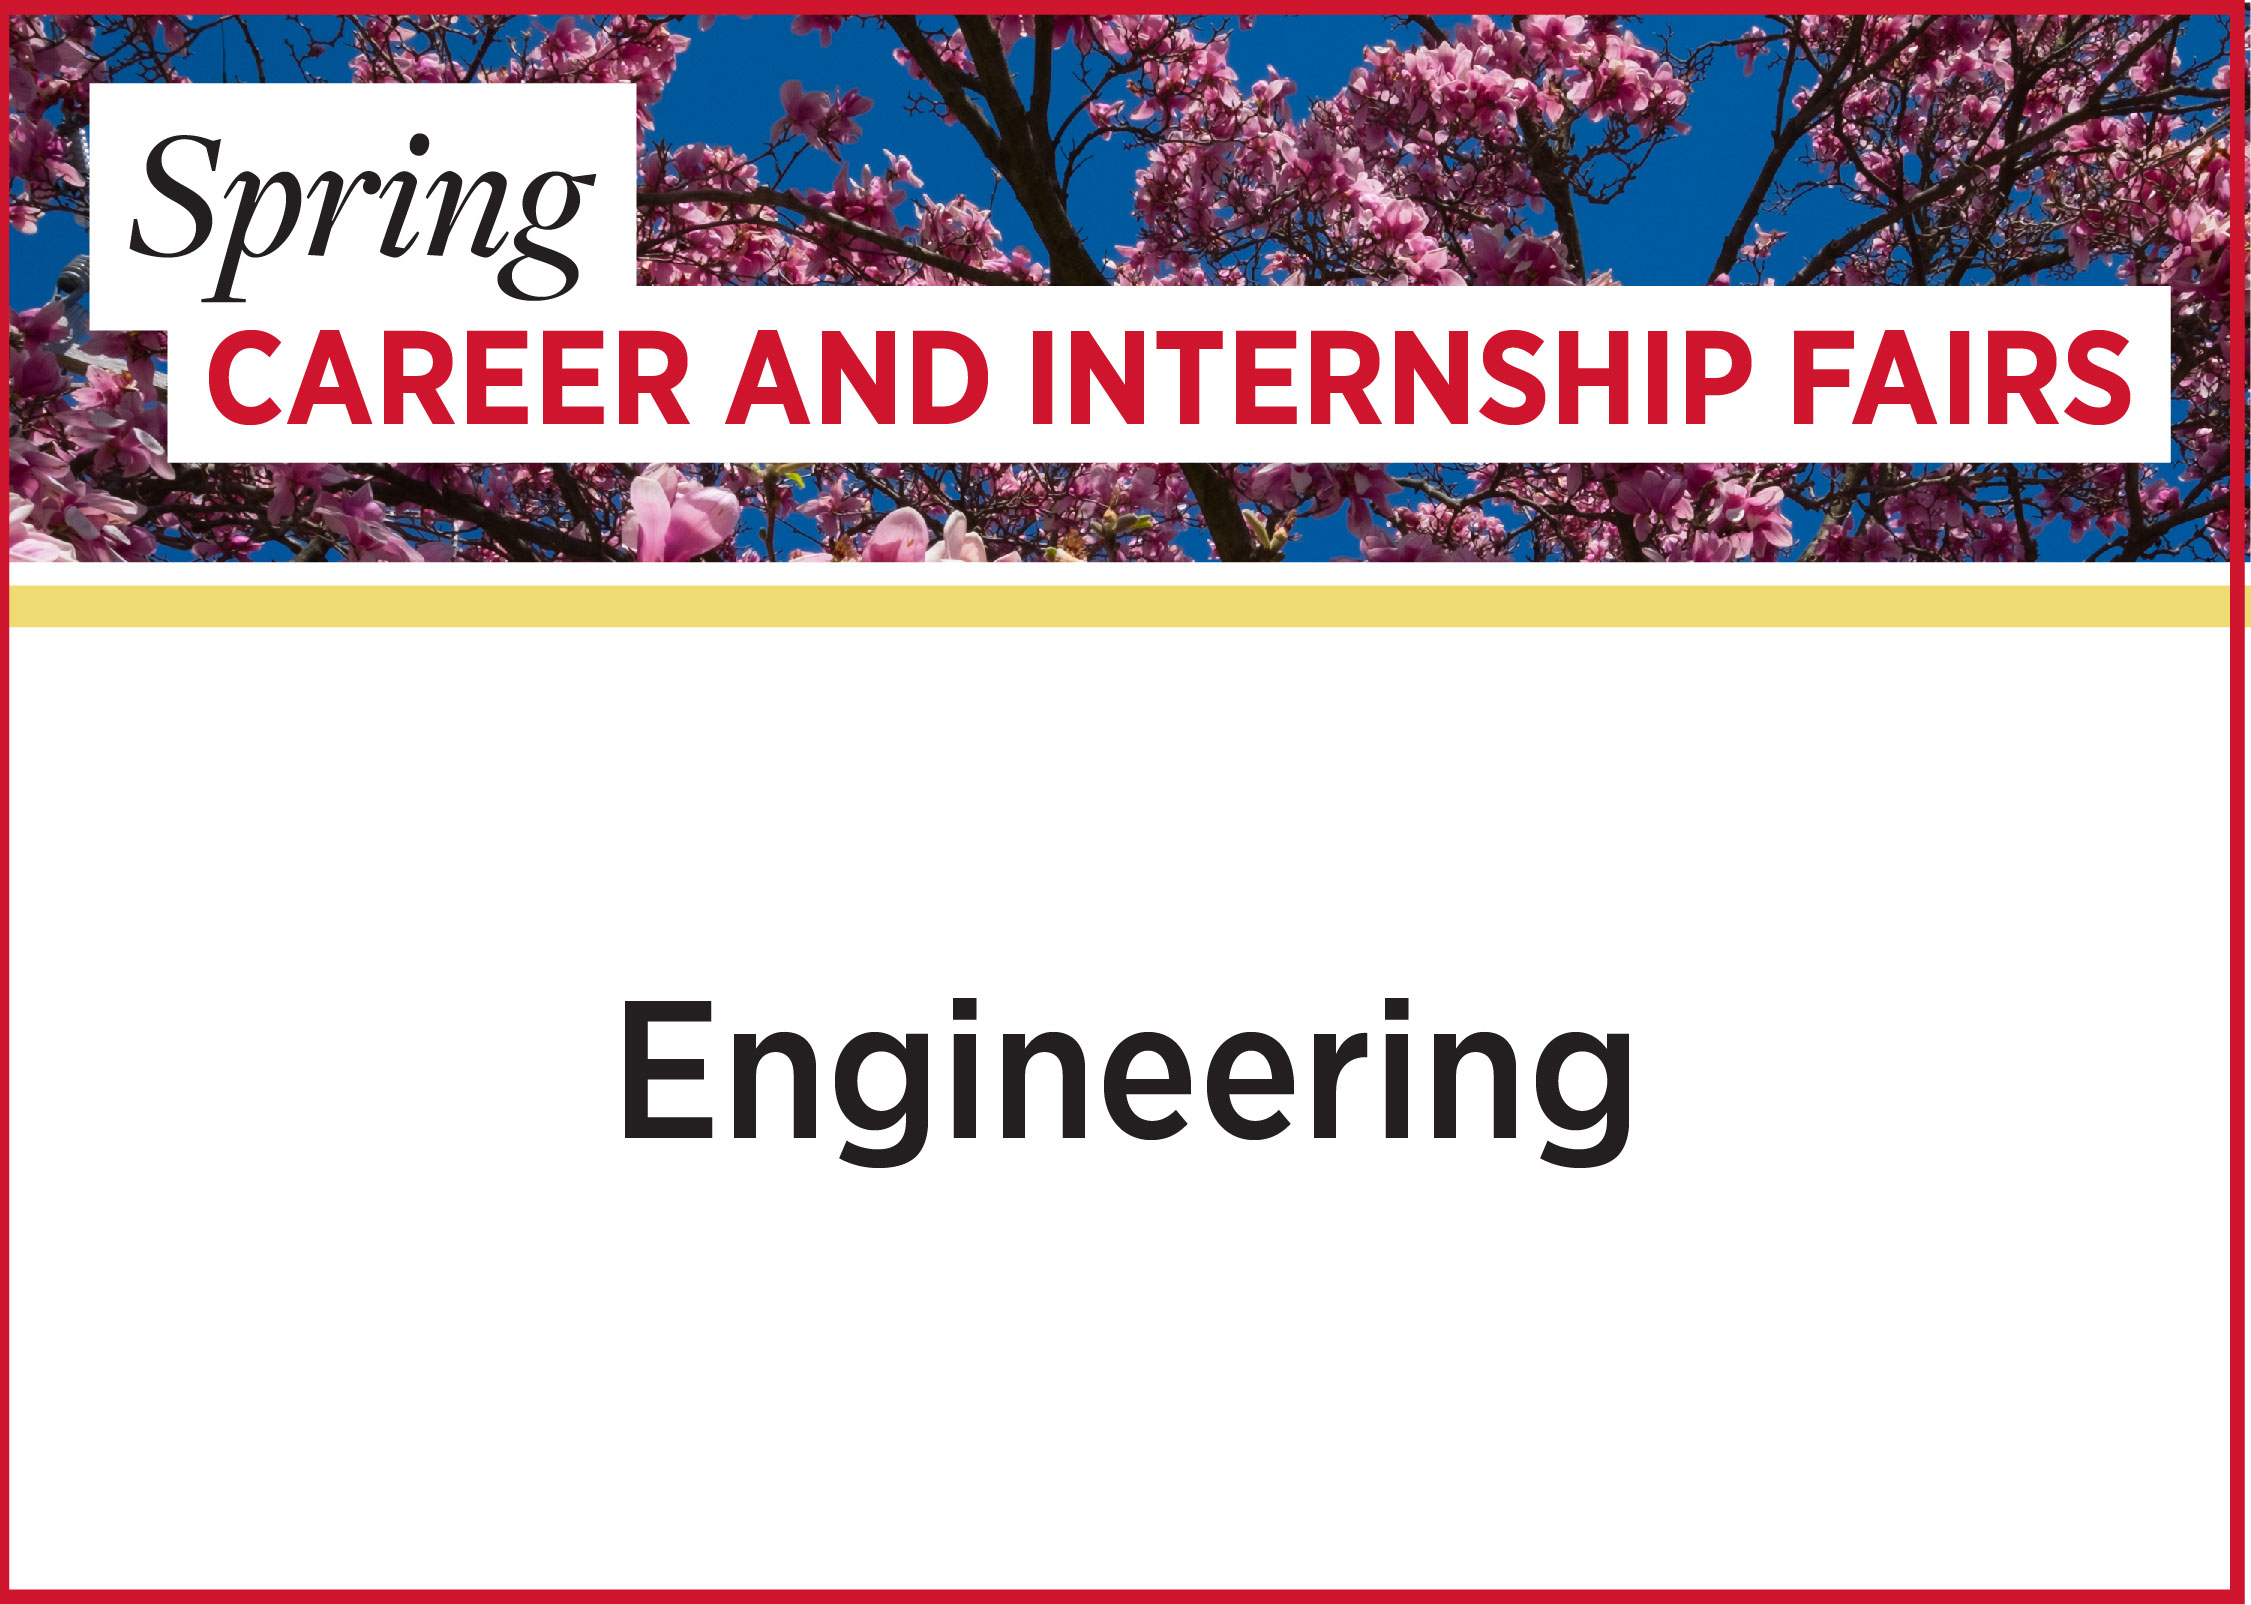 Spring Career and Internship Fairs - Engineering